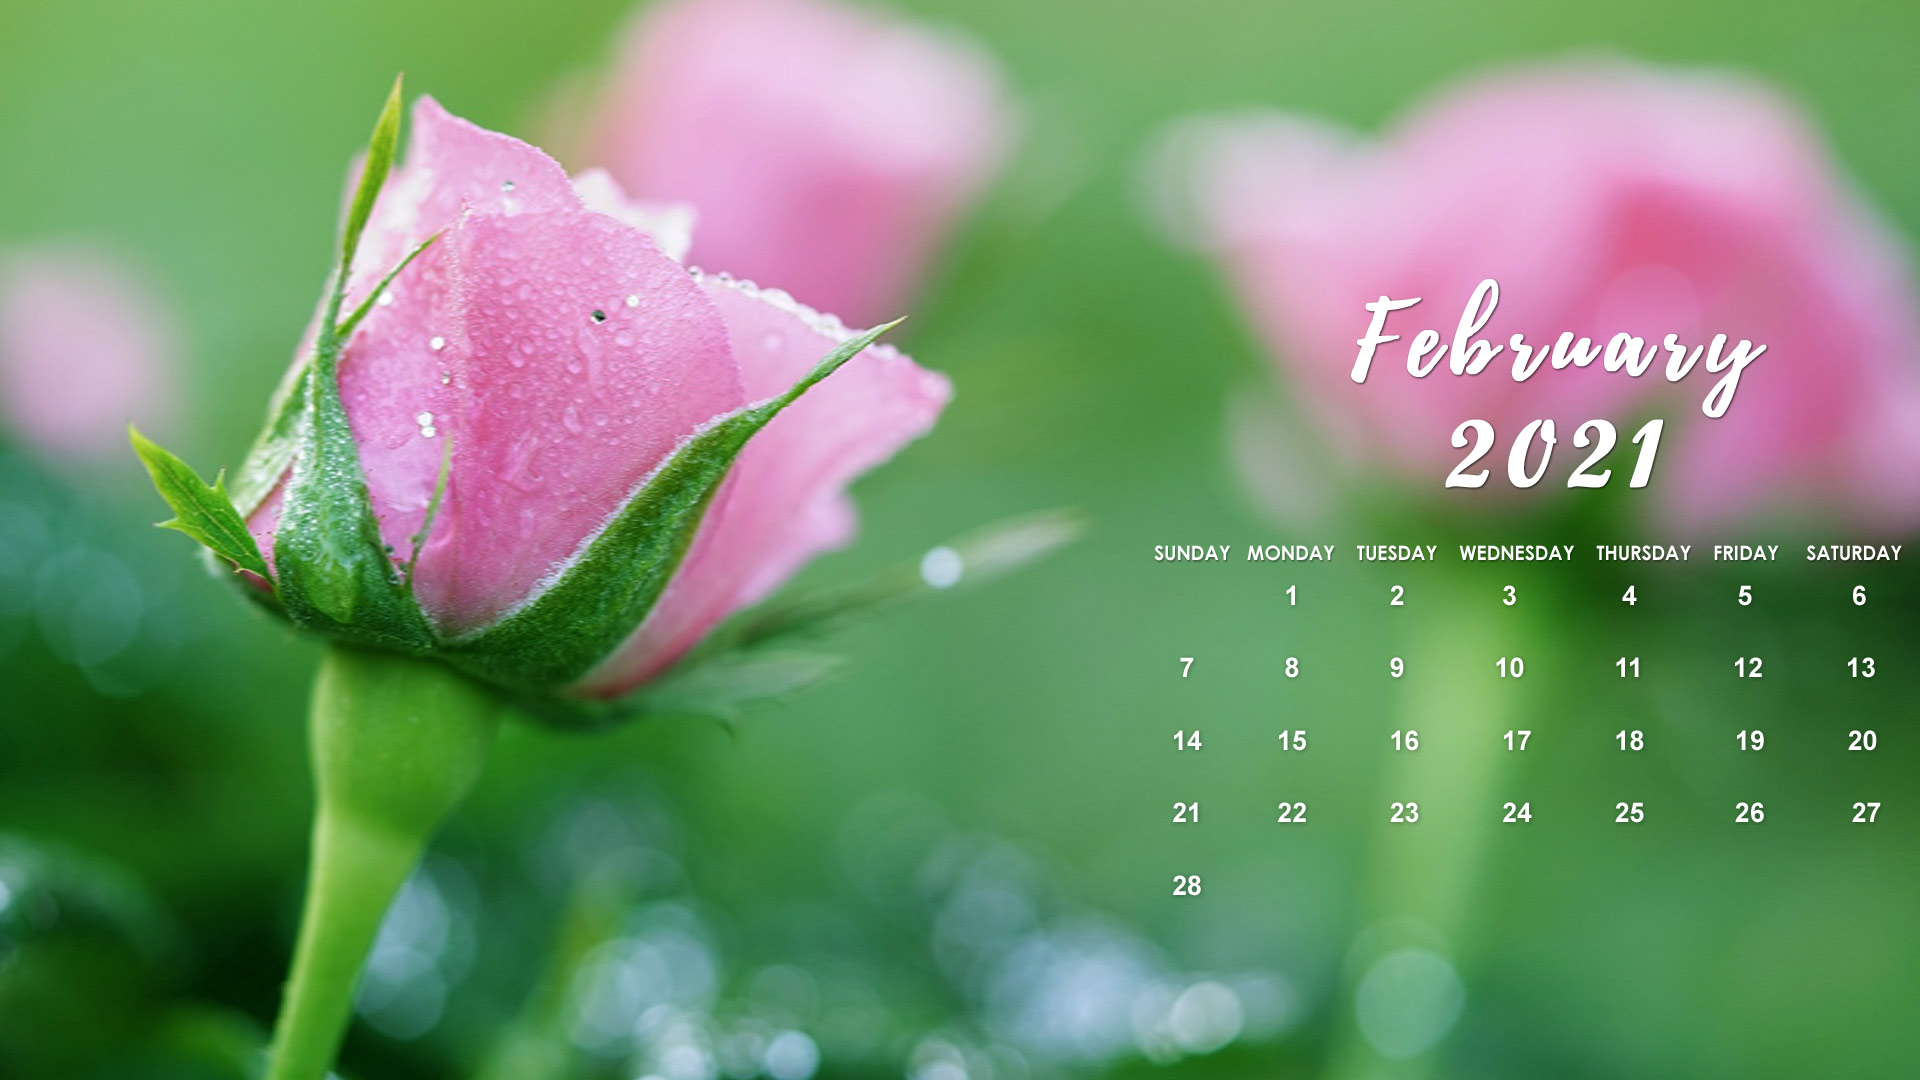 February 2021 Calendar With Holidays Wallpaper 3000 Vectors Stock